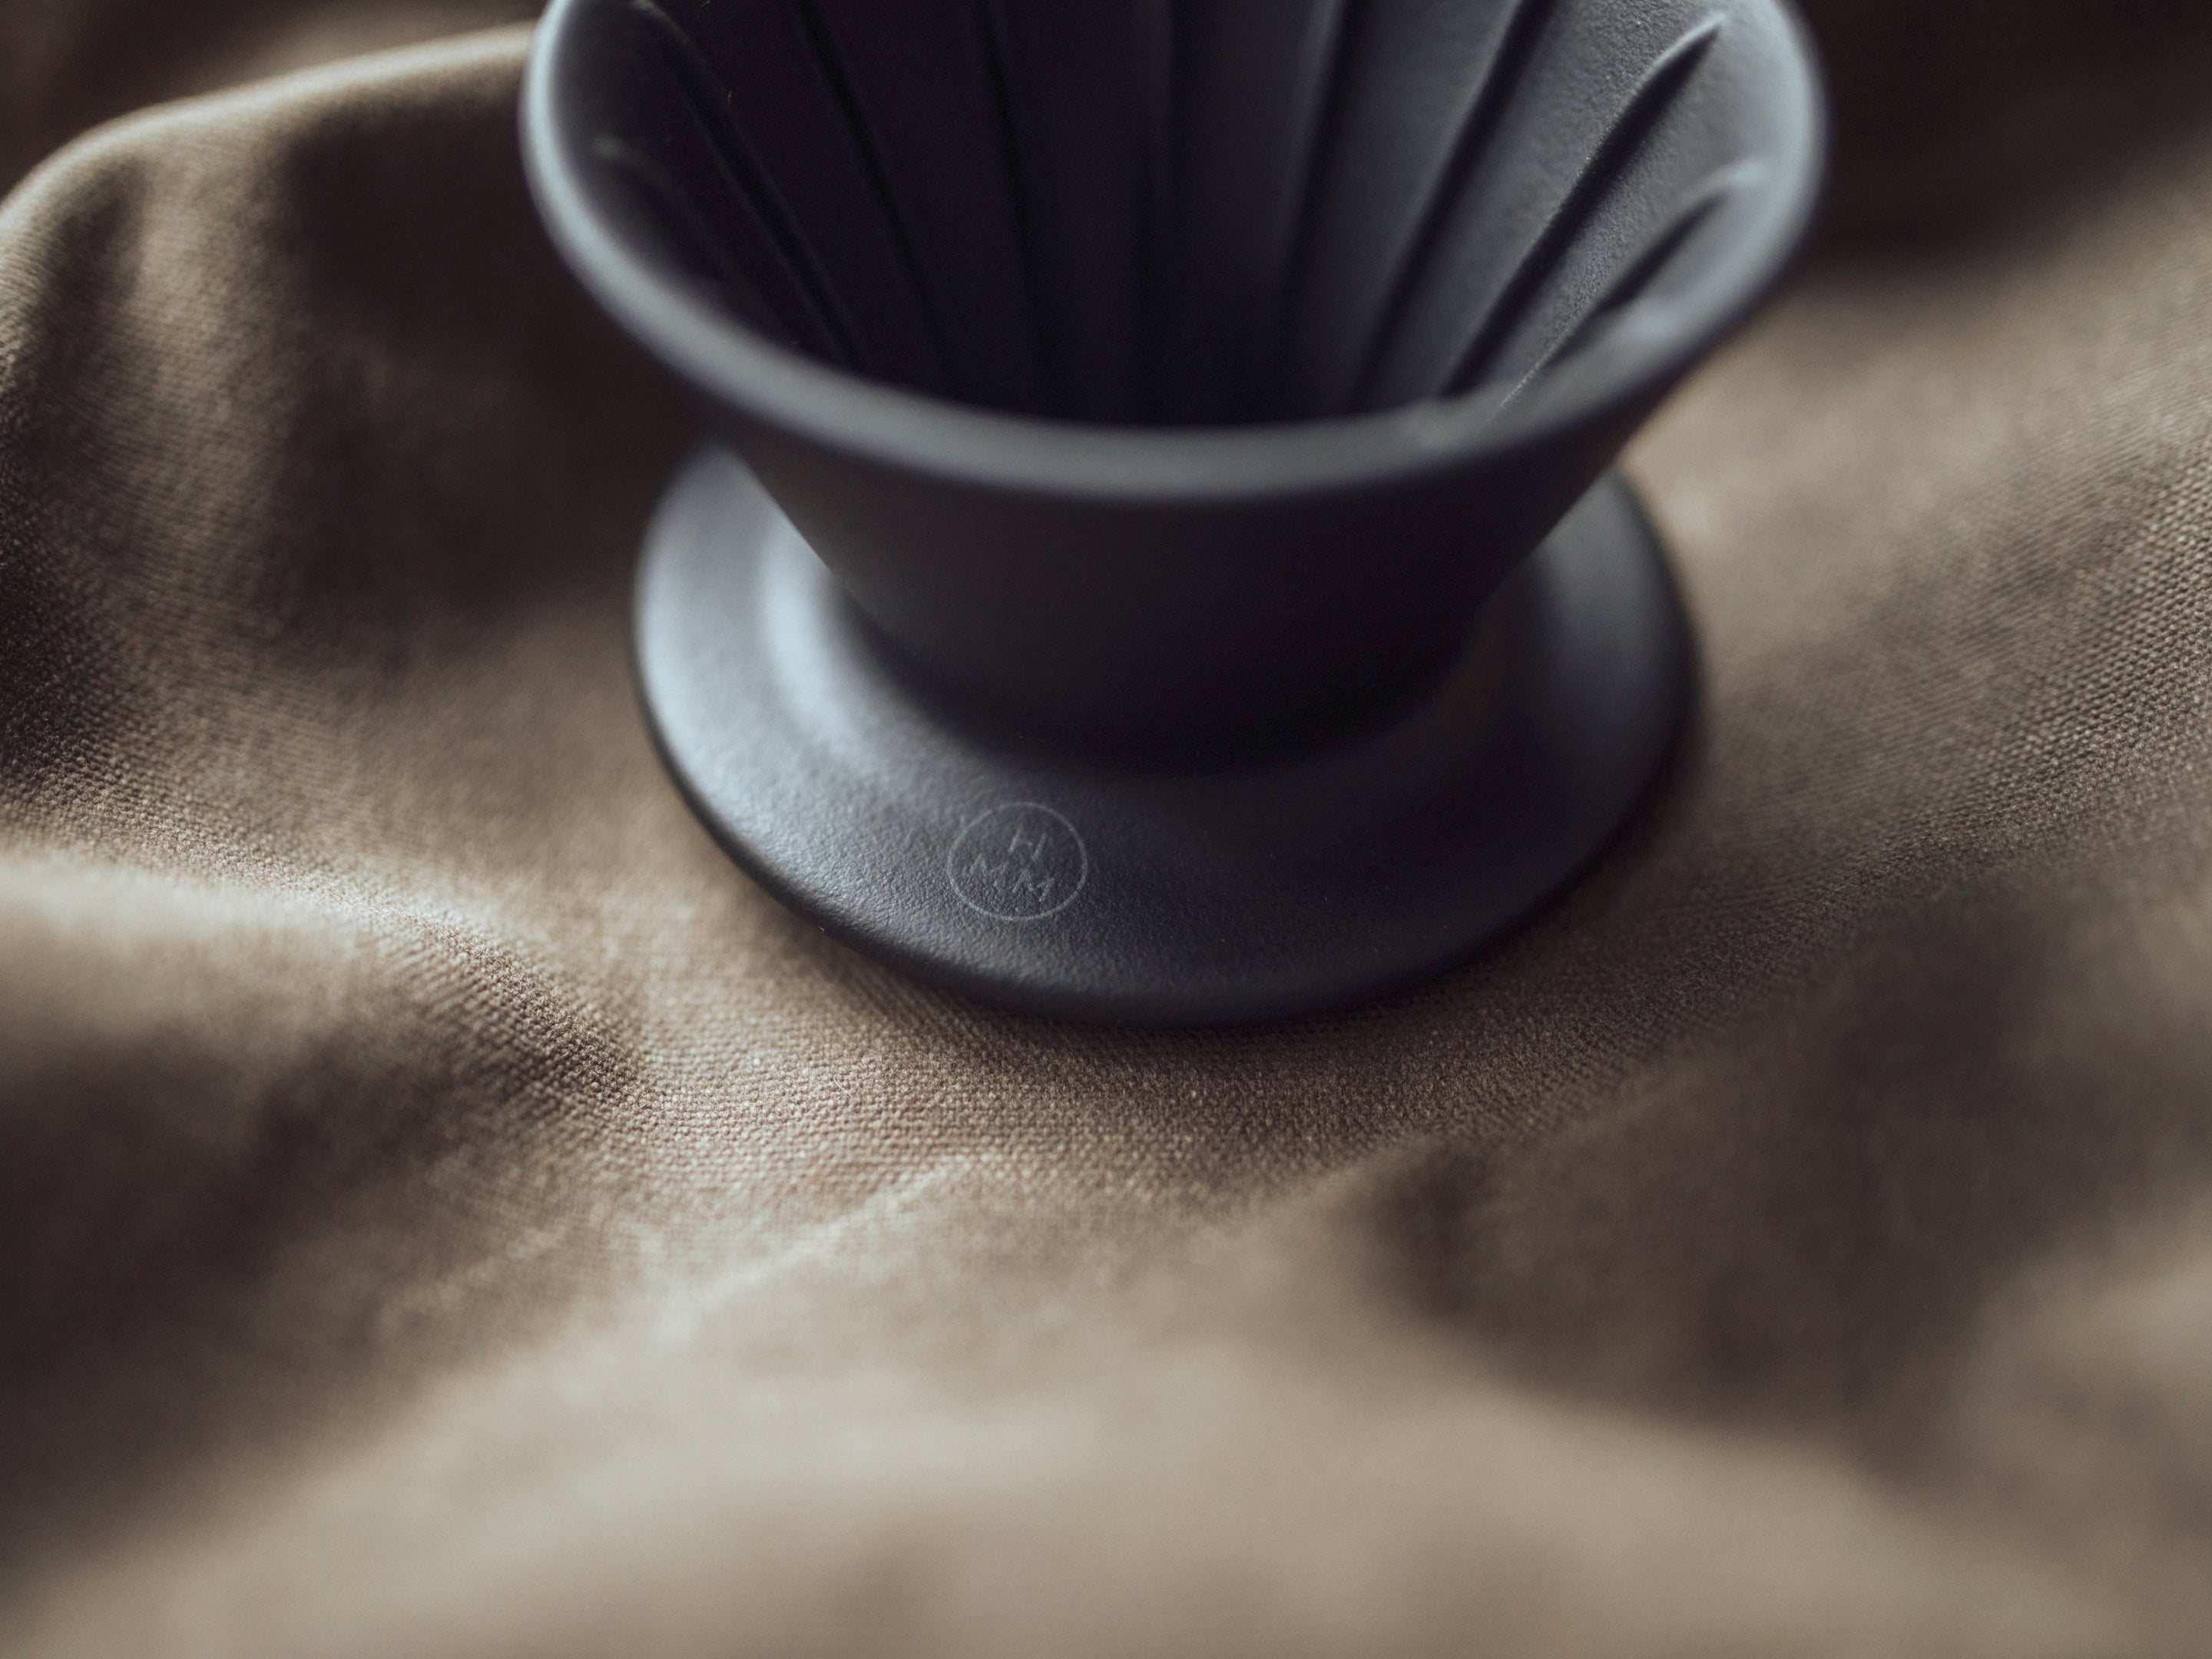 Patio Ceramic Coffee Dripper by HMM